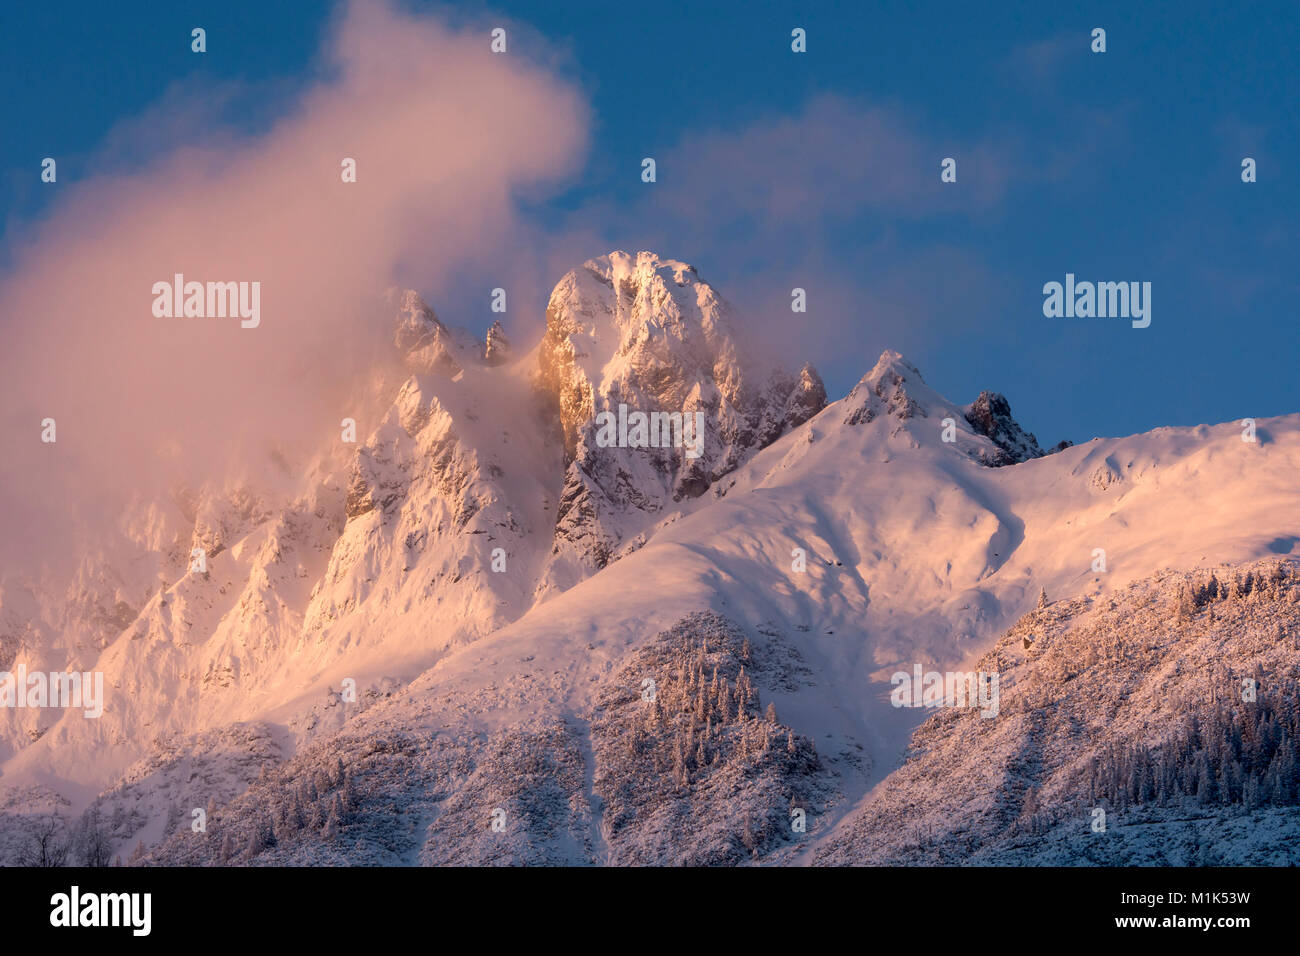 Mountain landscape in winter, Mittagsspitze and Fiechterspitze, Karwendel mountains, Tyrol, Austria Stock Photo